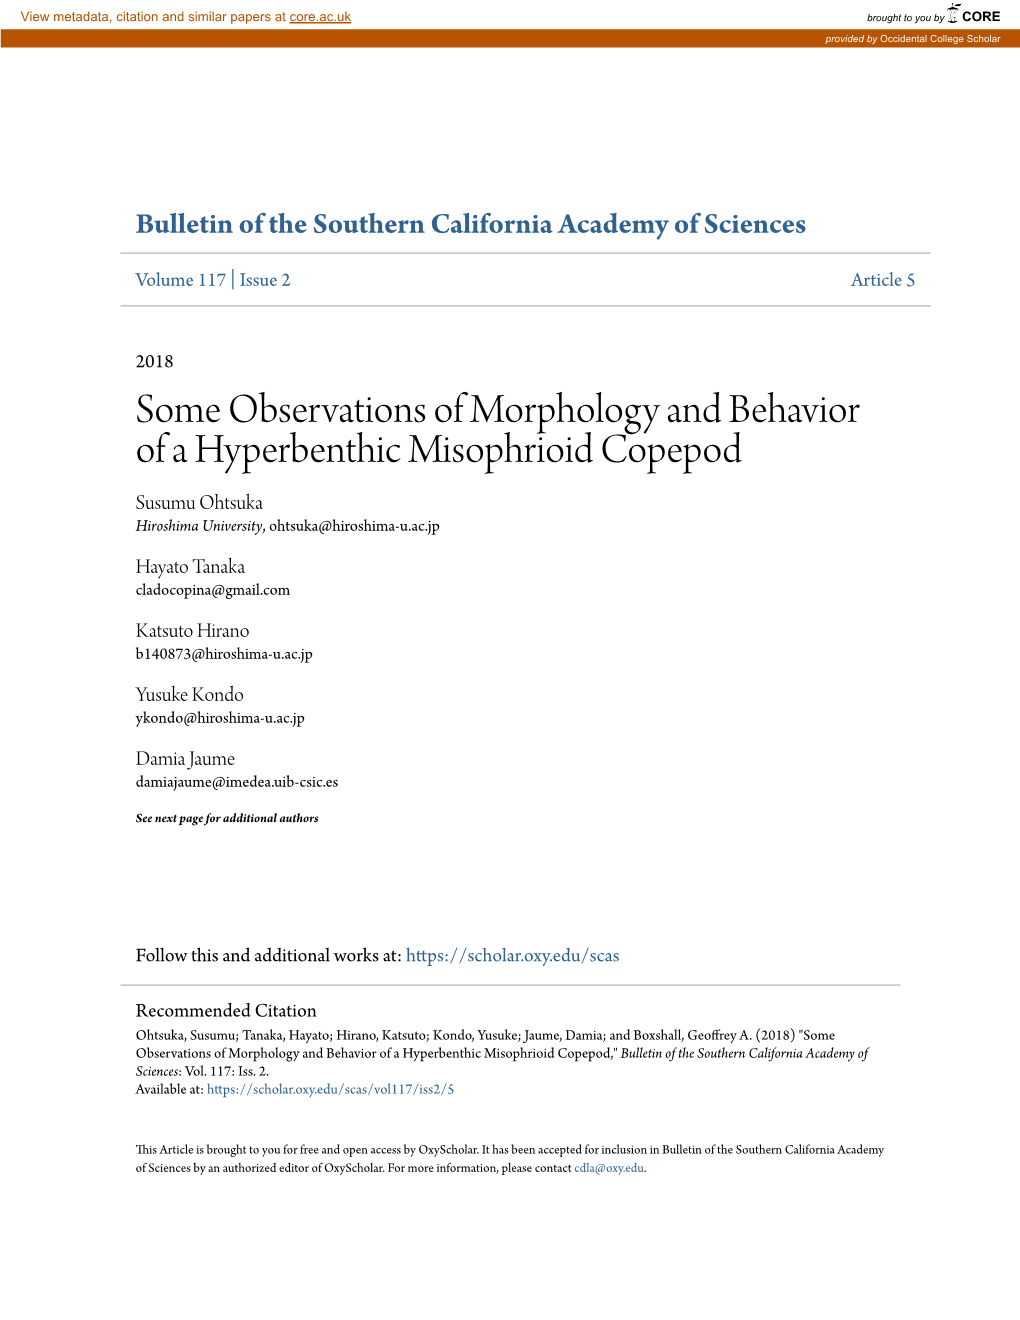 Some Observations of Morphology and Behavior of a Hyperbenthic Misophrioid Copepod Susumu Ohtsuka Hiroshima University, Ohtsuka@Hiroshima-U.Ac.Jp